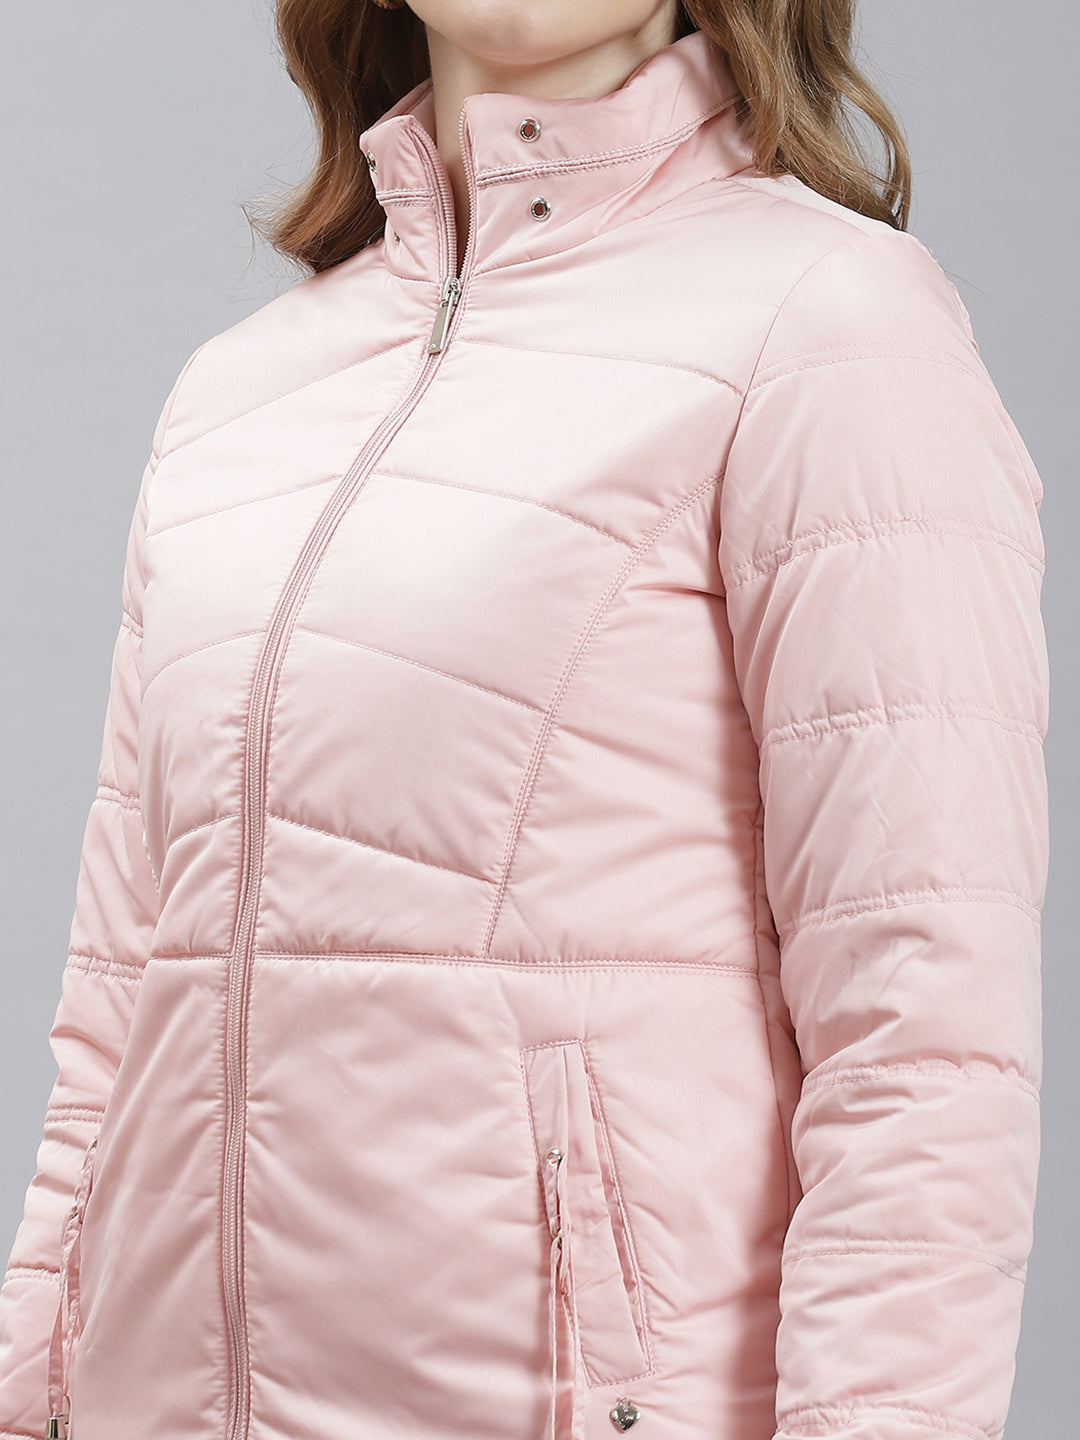 Fur ladies ski jackets. Real fur hoods and collars. | Winternational